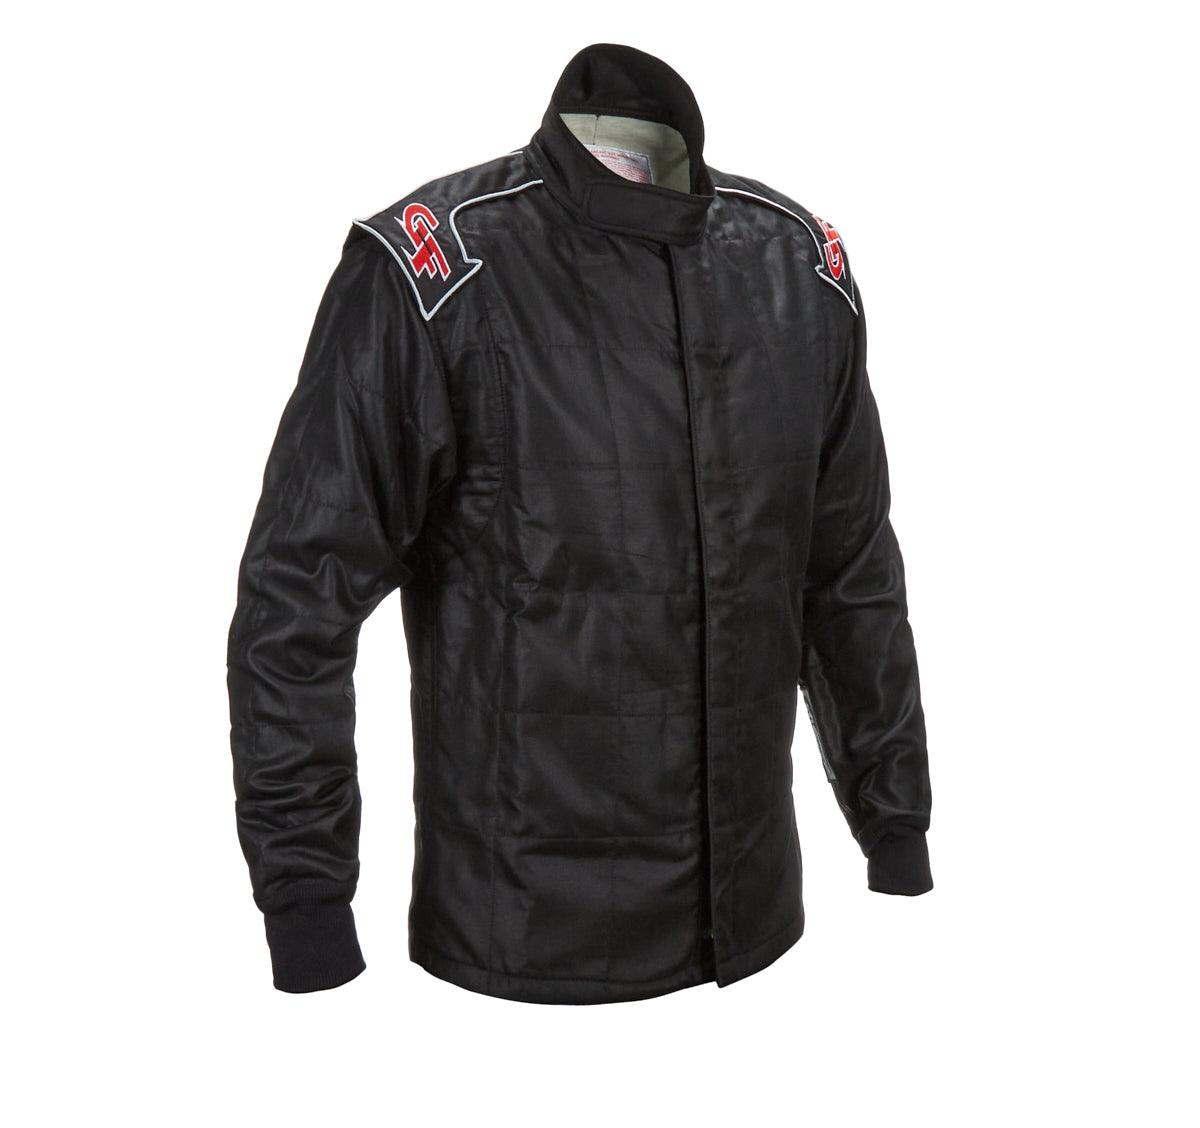 Jacket G-Limit Small Black SFI-5 - Burlile Performance Products